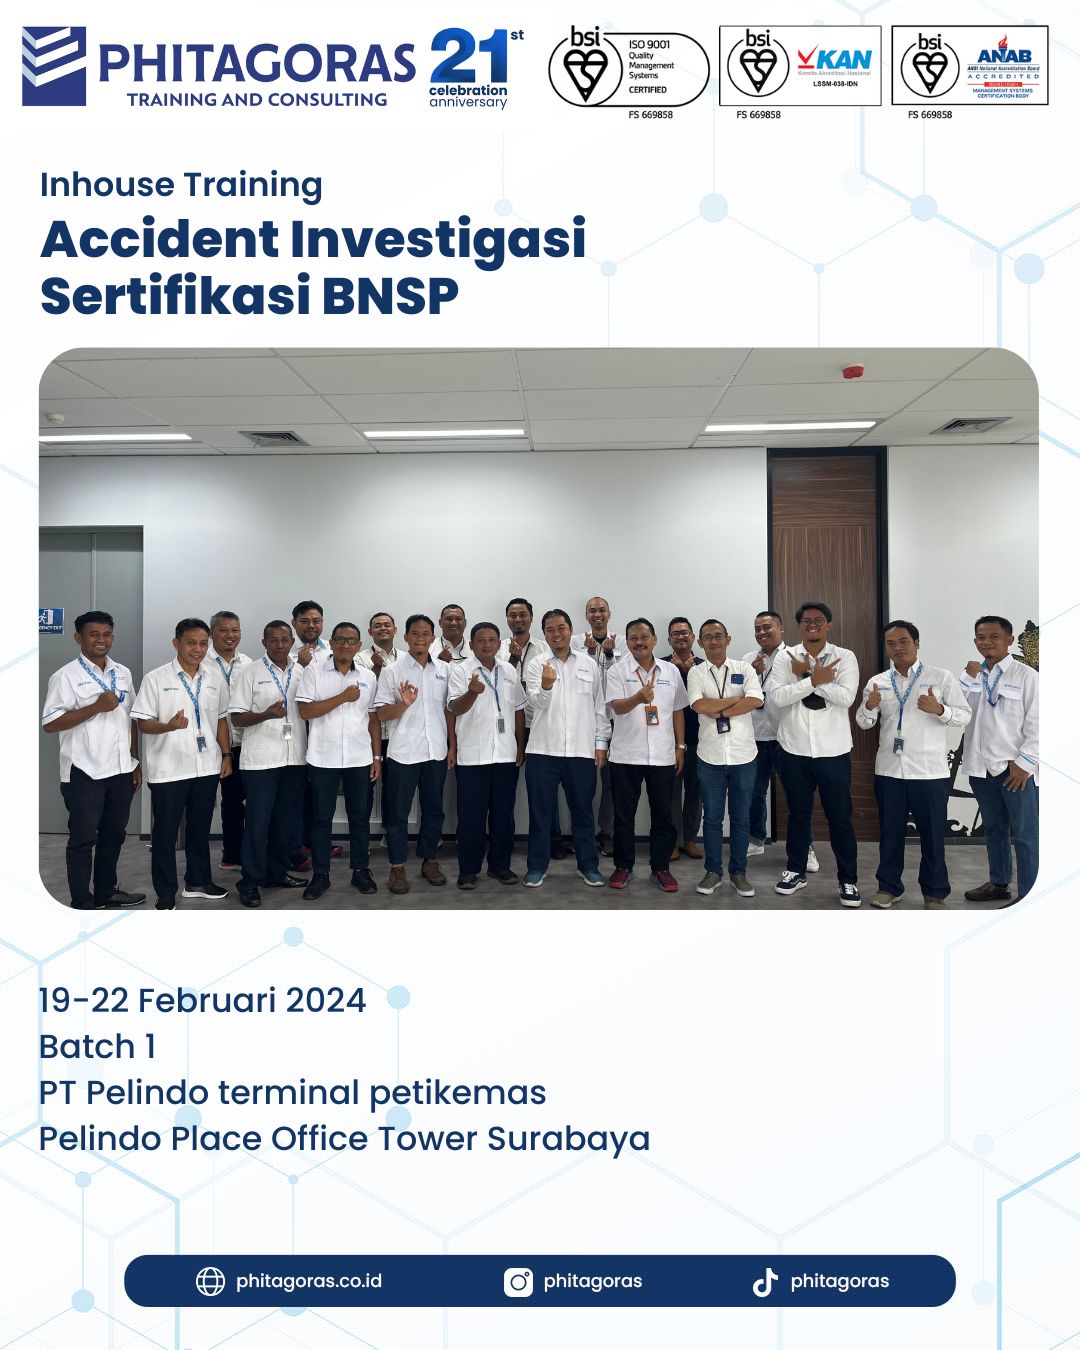 Inhouse Training Accident Investigation Sertifikasi BNSP - PT Pelindo Terminal Petikemas Batch 1 di Pelindo Place Office Tower Surabaya